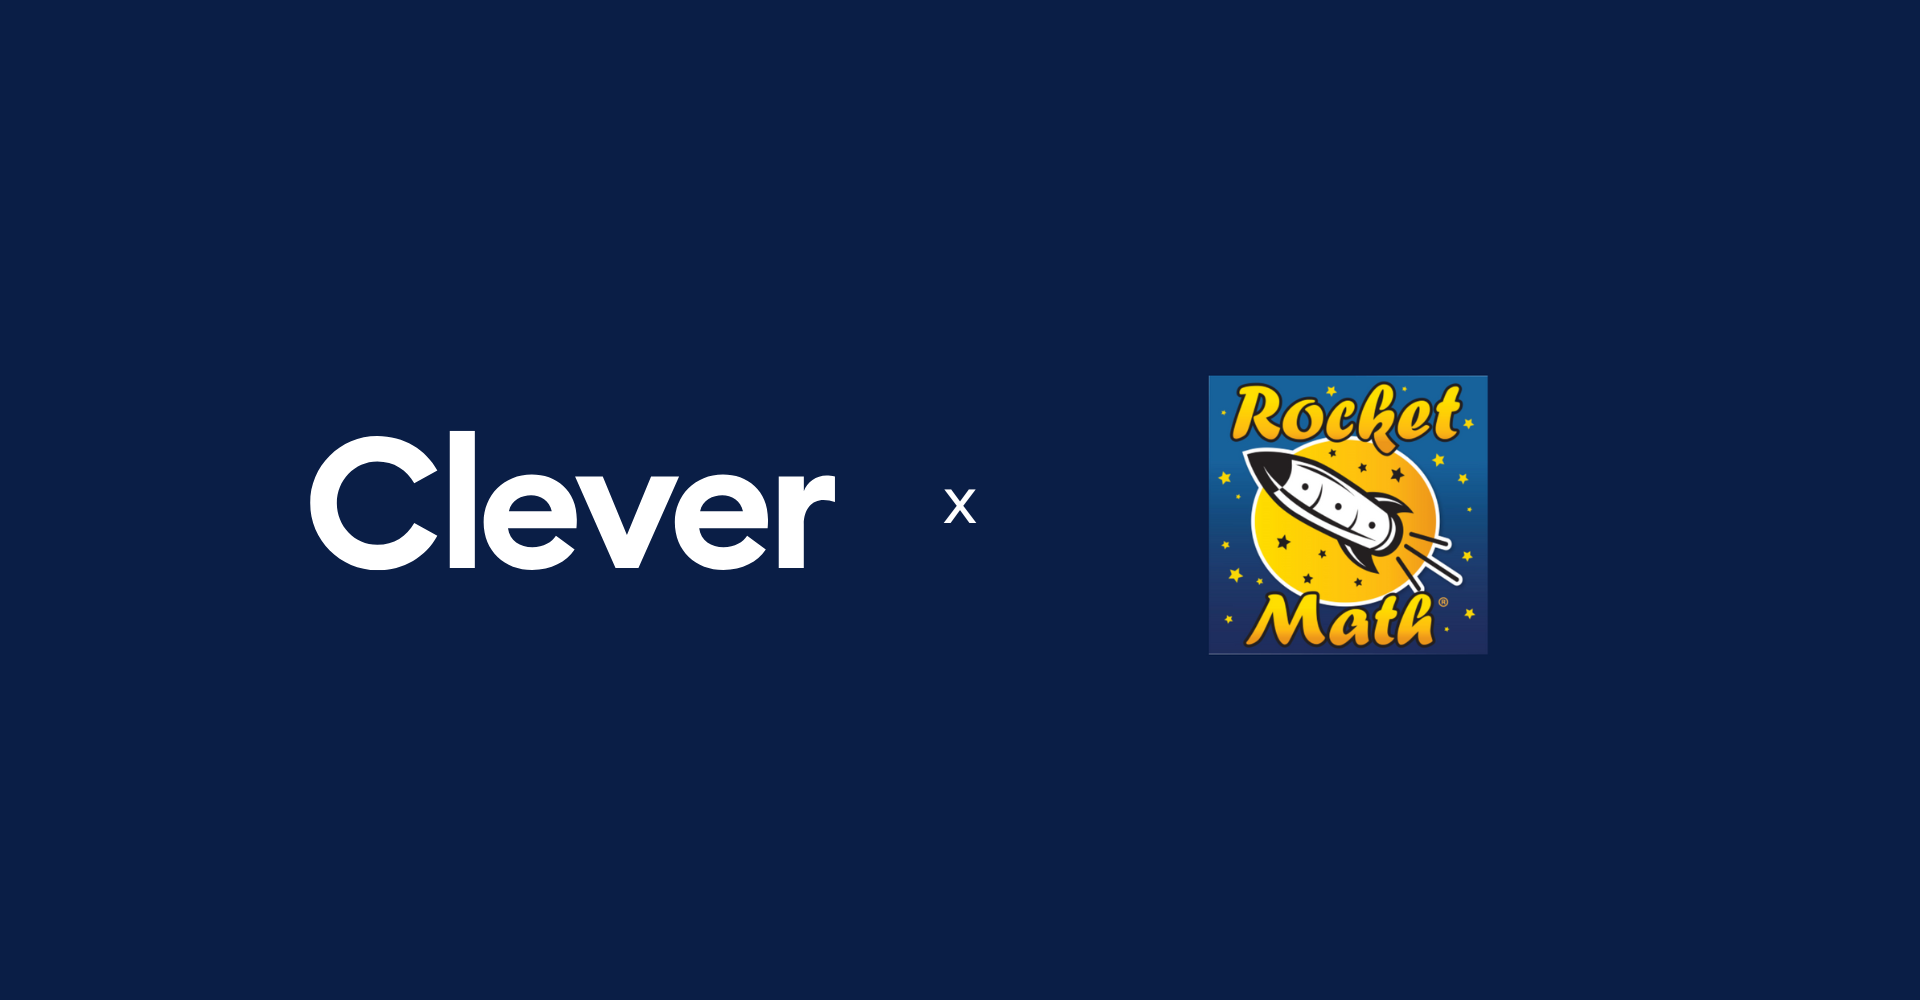 Rocket Math unlocks 500% increase in school connections